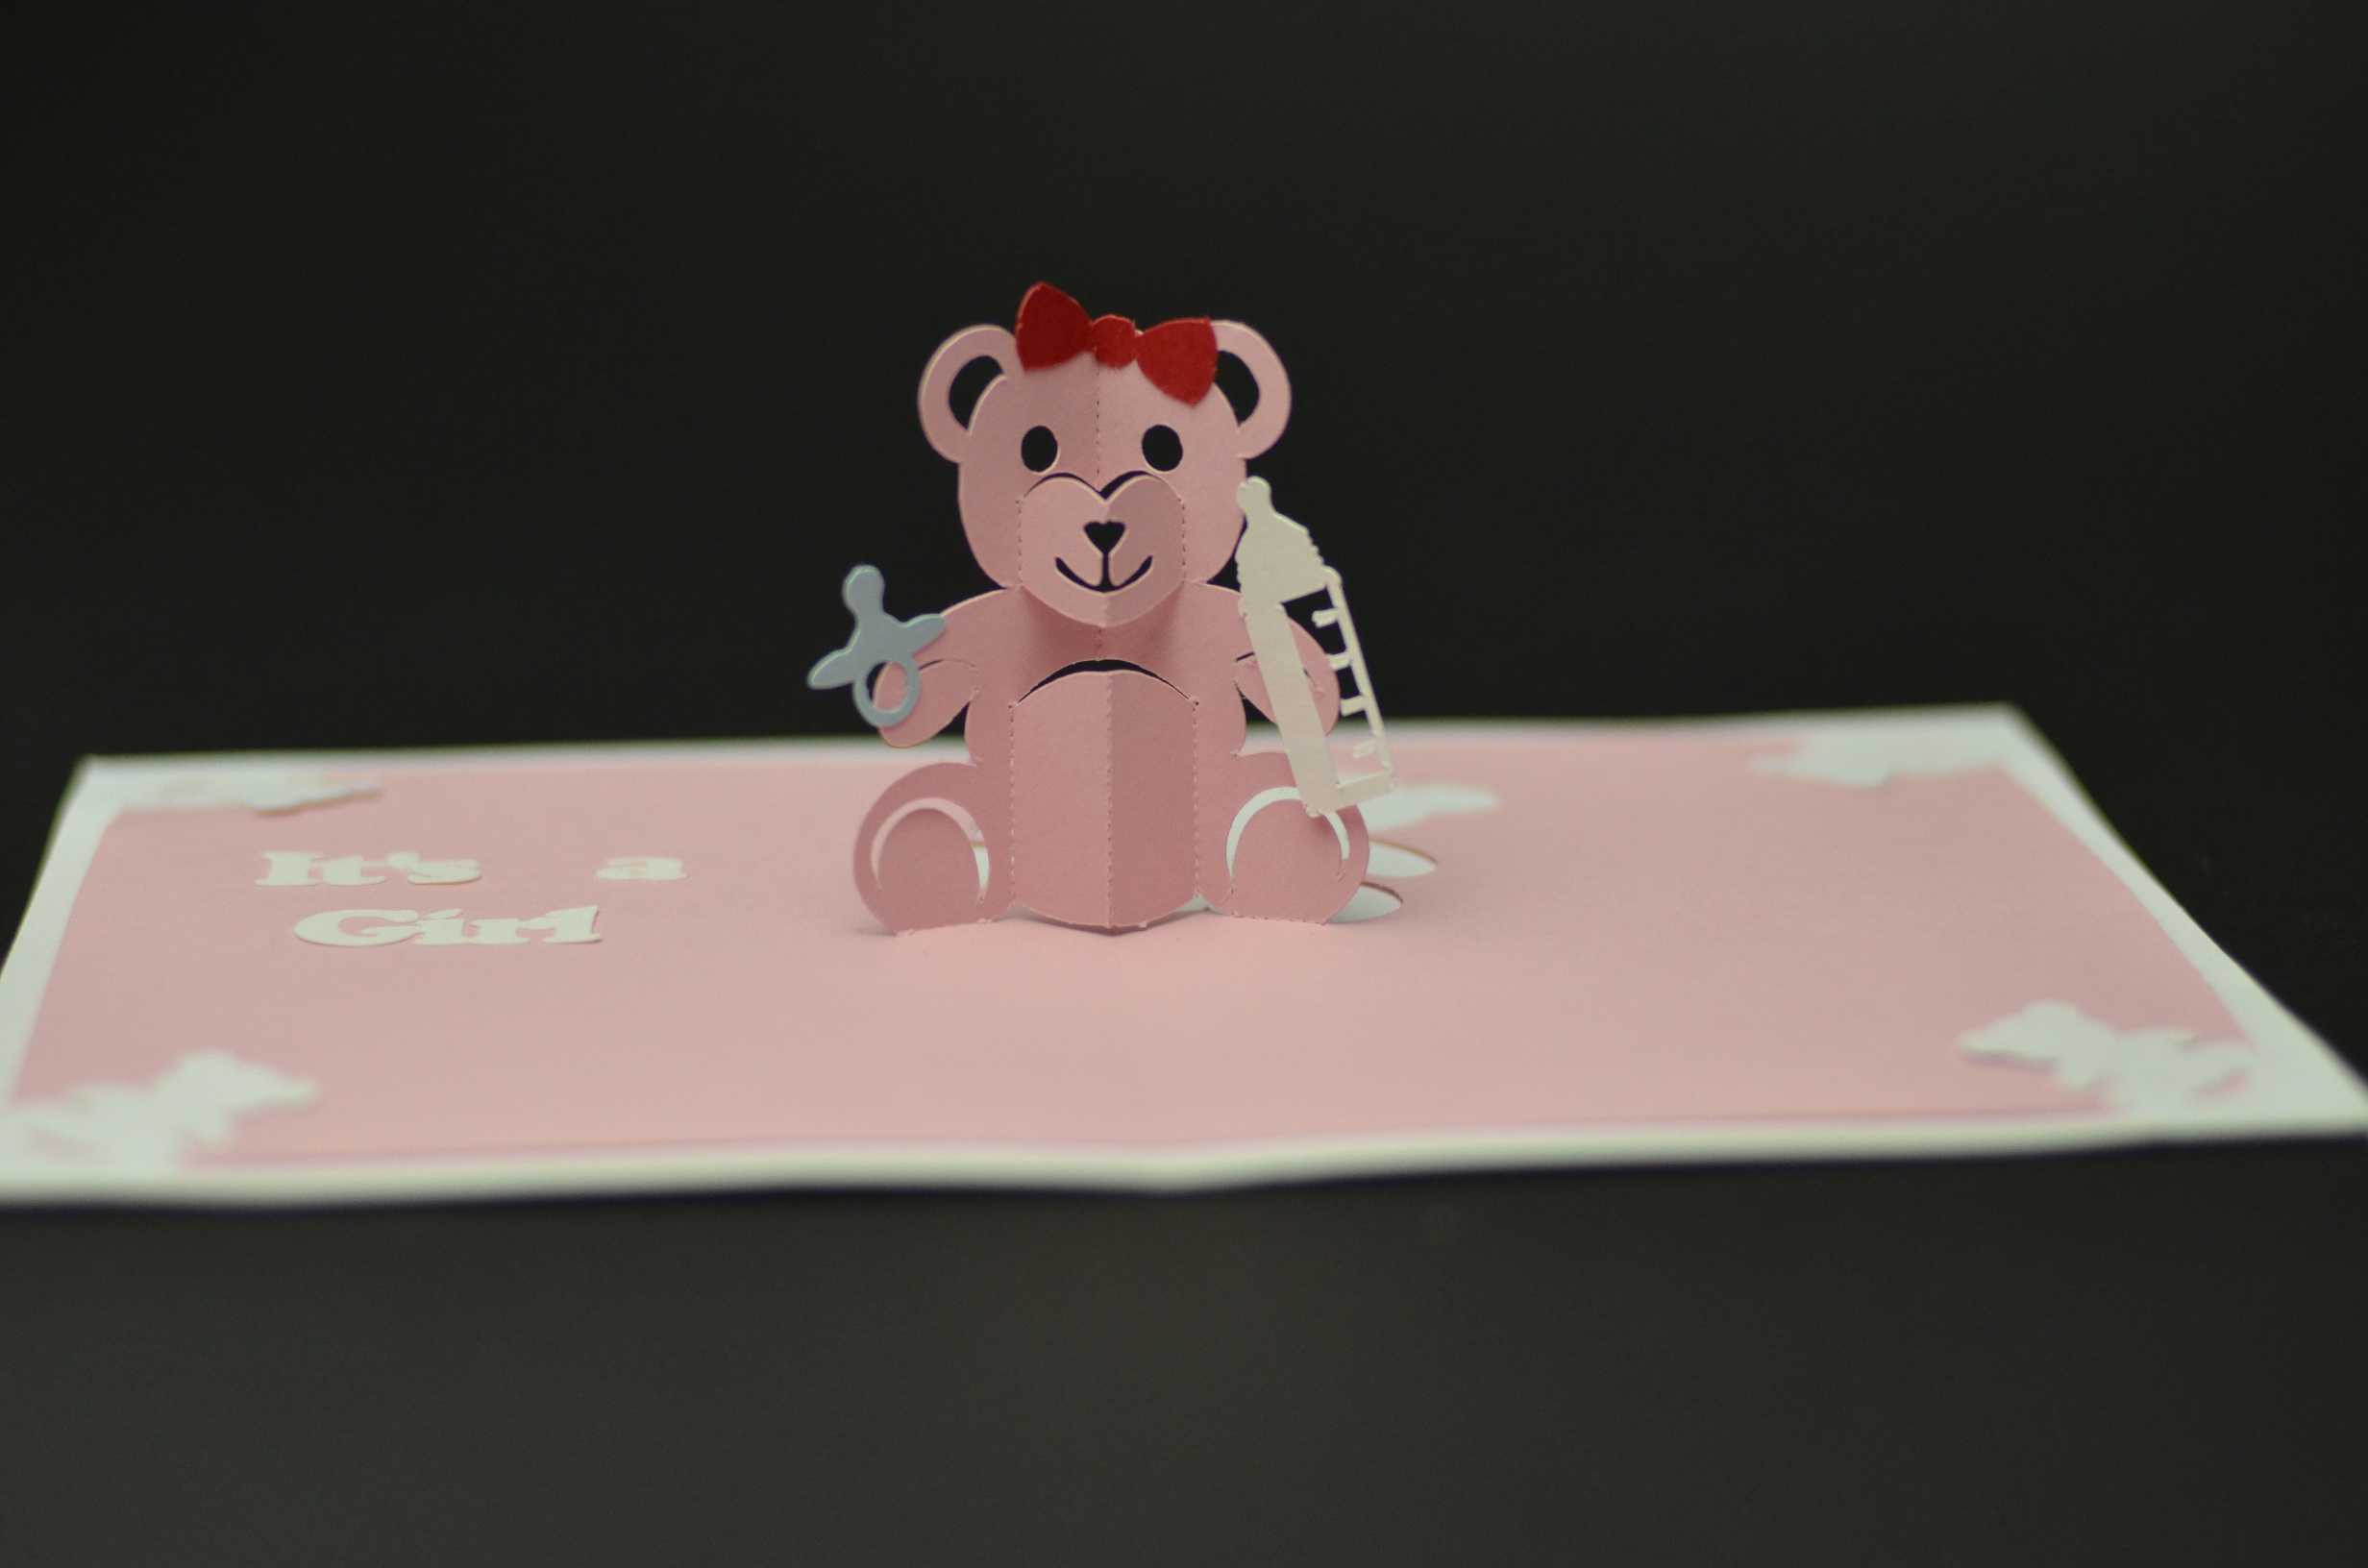 Teddy Bear Pop Up Card: Tutorial And Template - Creative Pop For Teddy Bear Pop Up Card Template Free